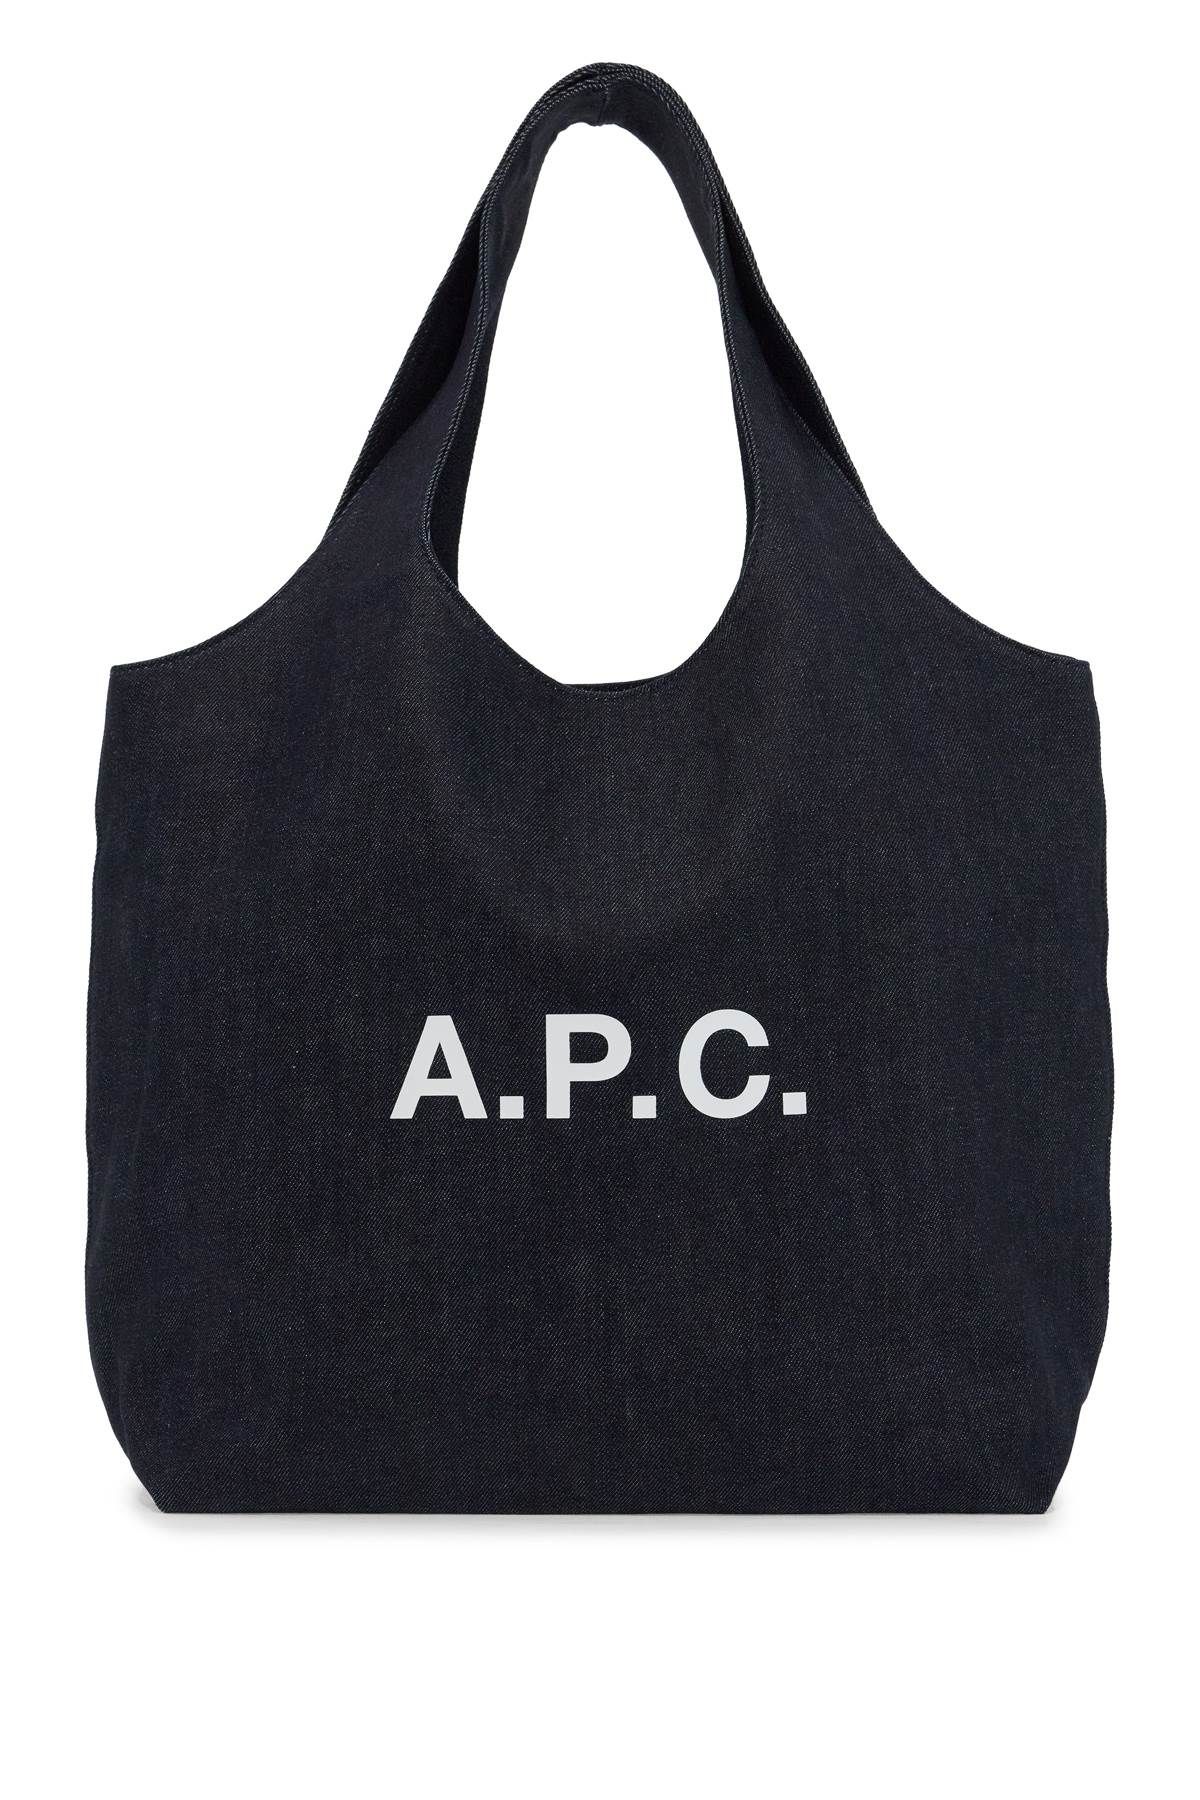 A.P.C. A. P.C. ninon tote bag